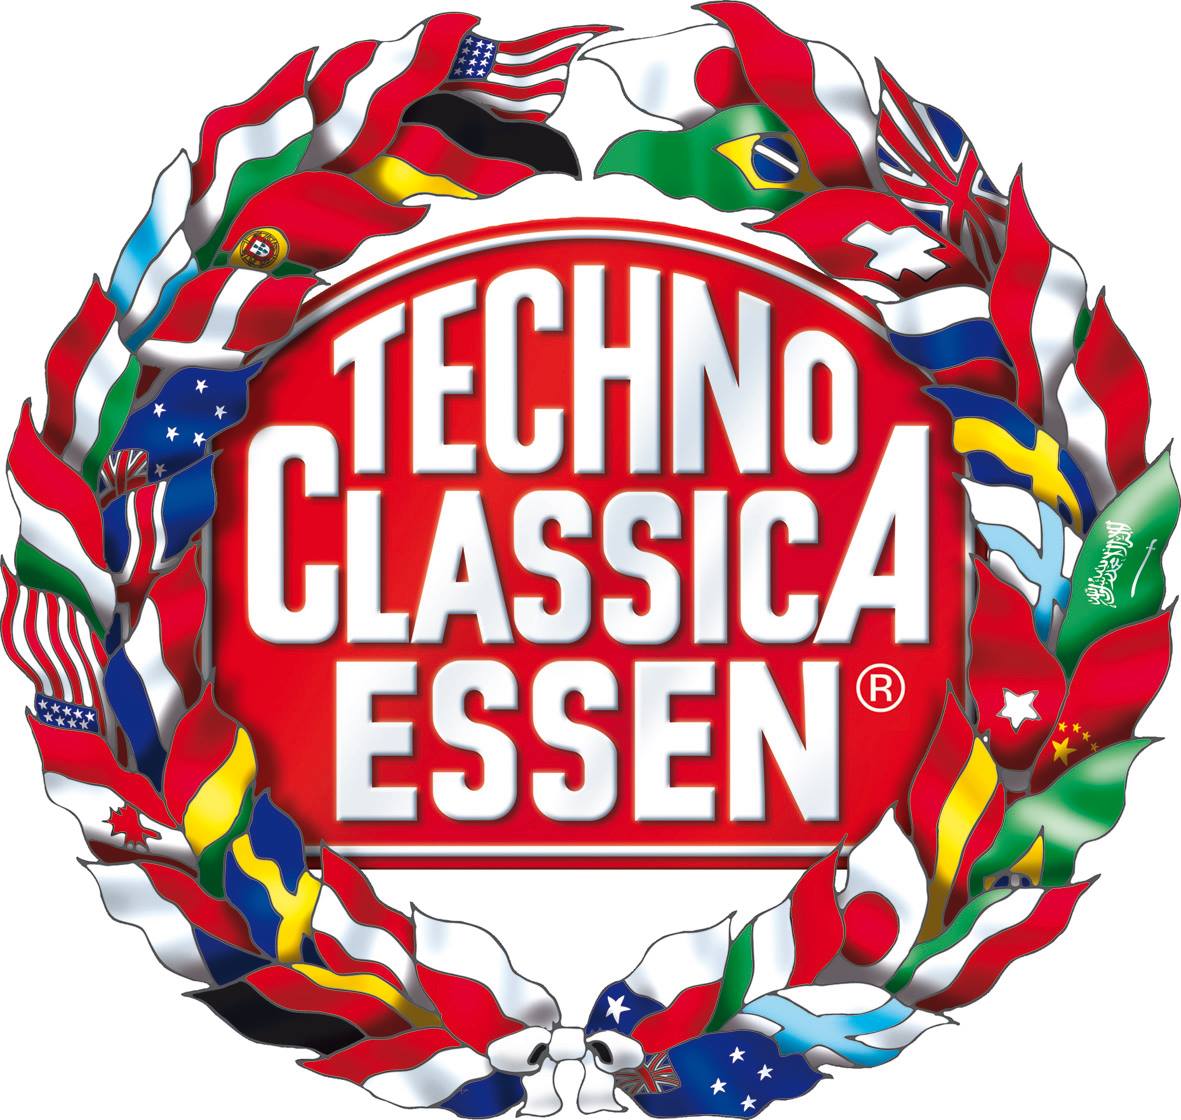 Techno Classica Essen - Racelens